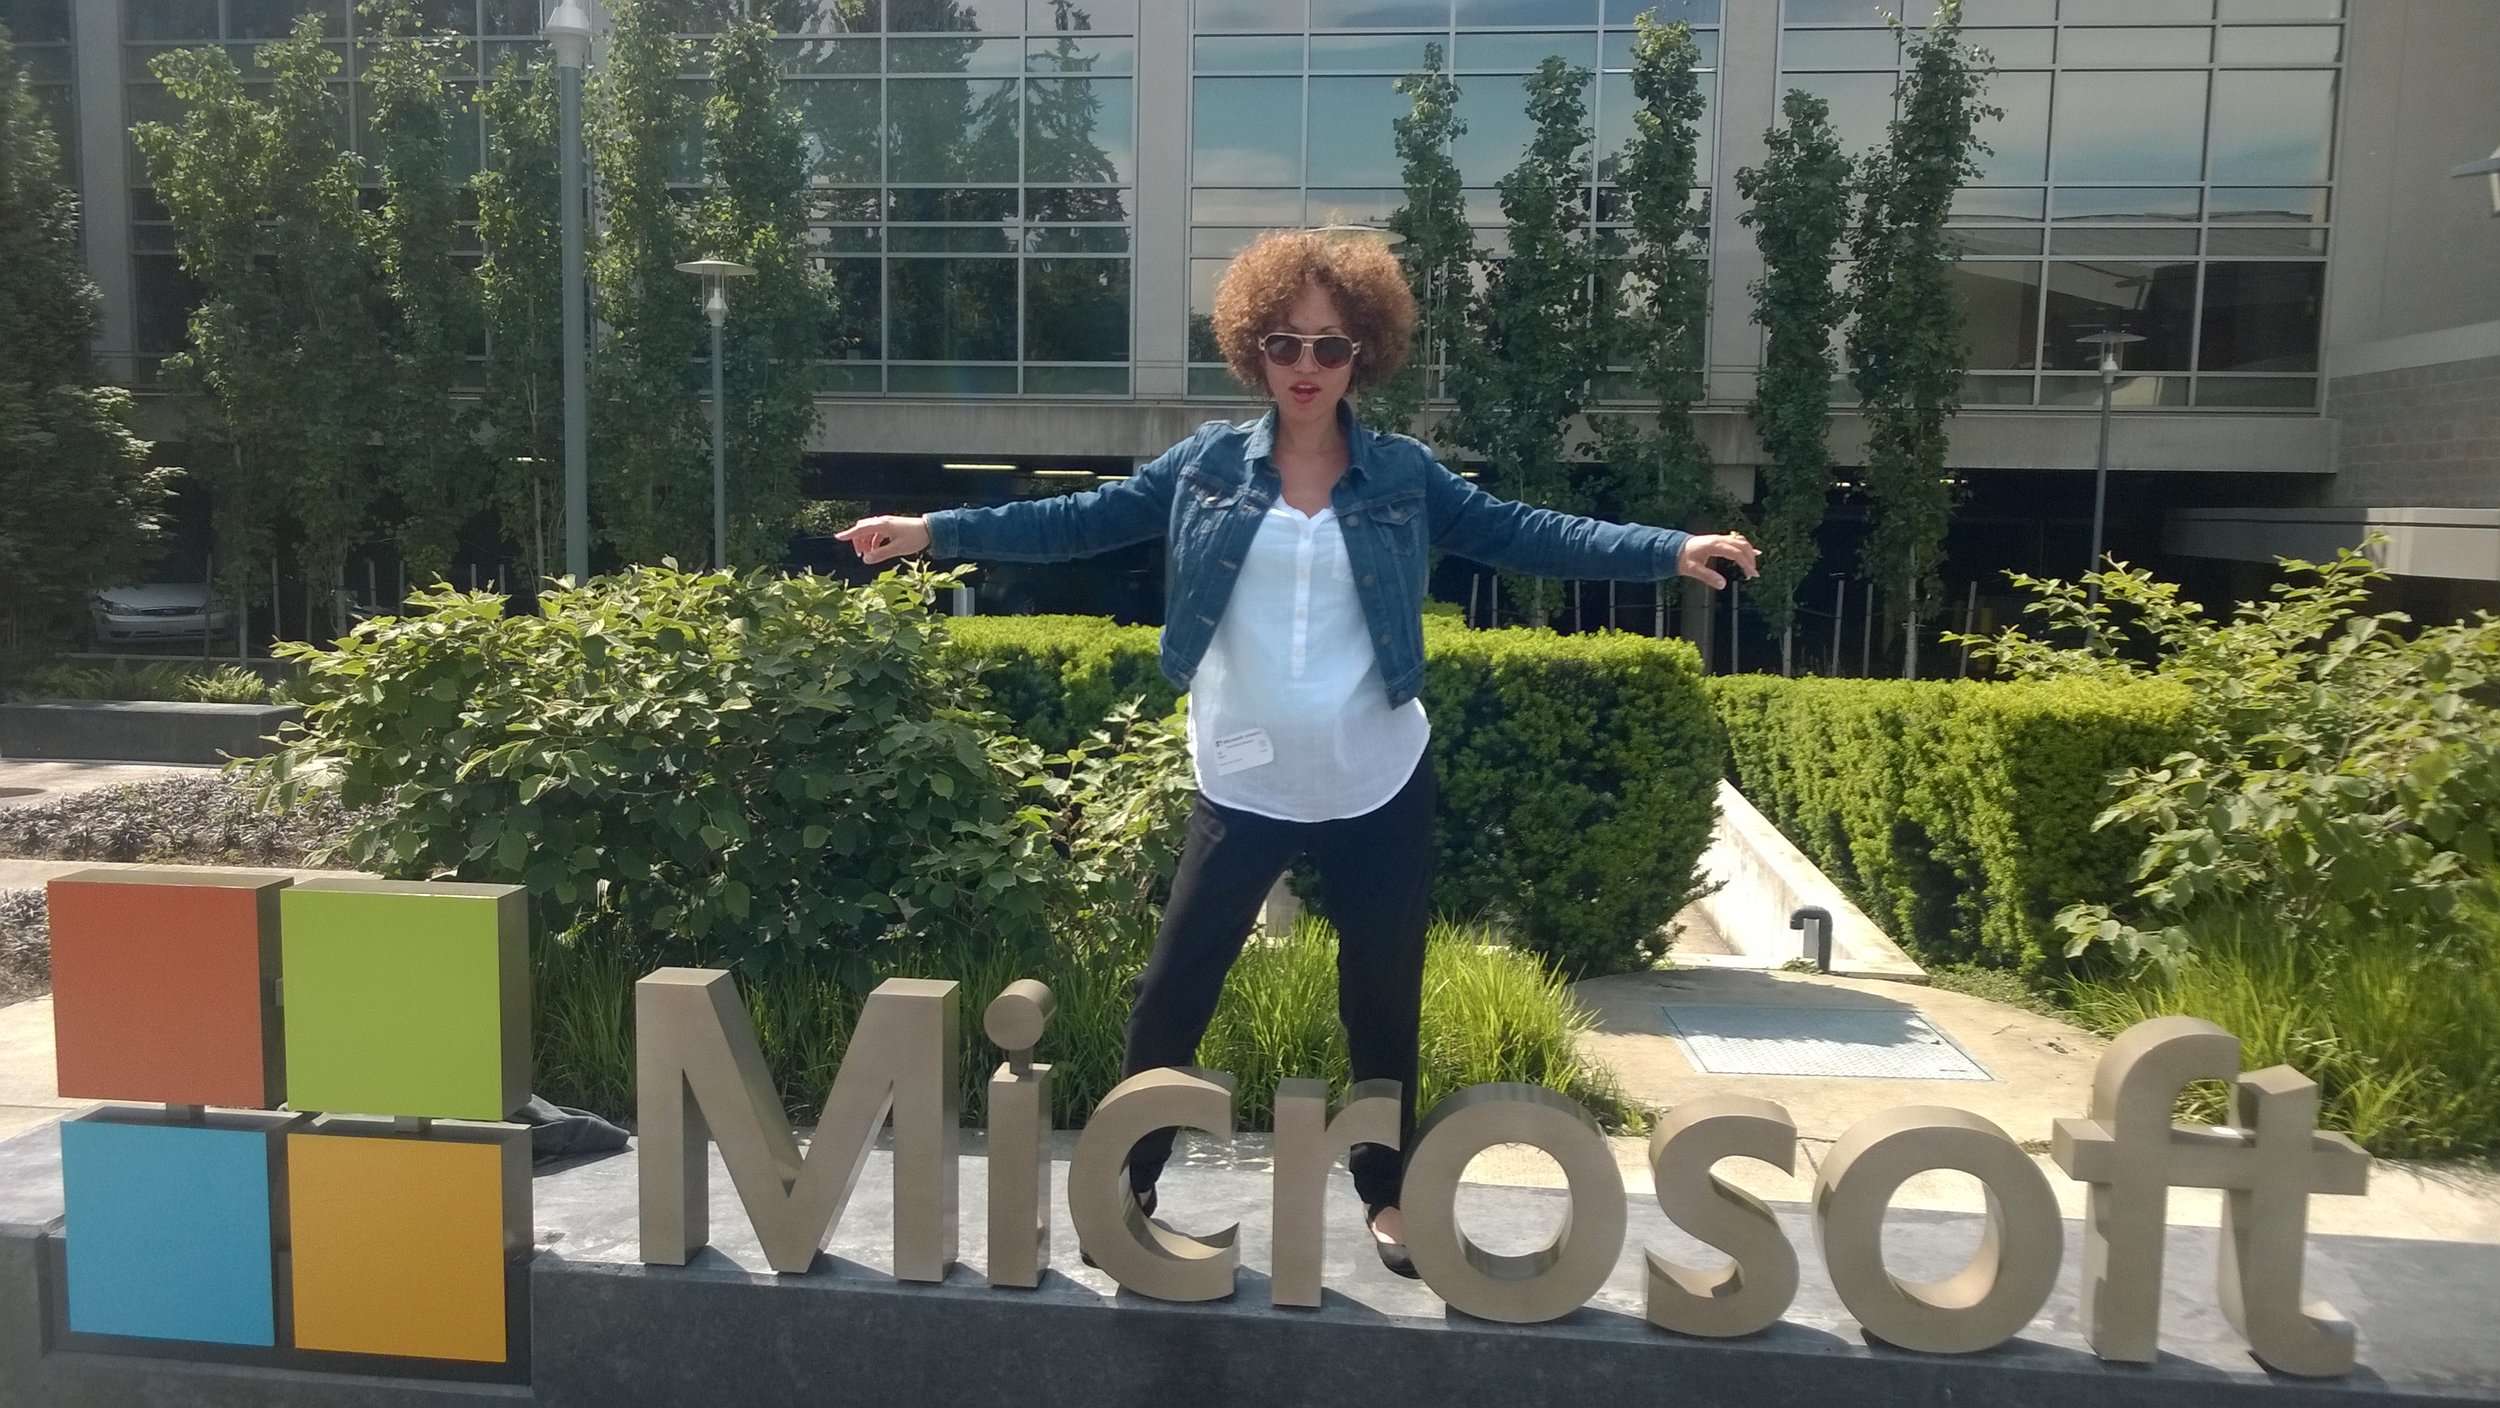 Sili Microsoft Sign